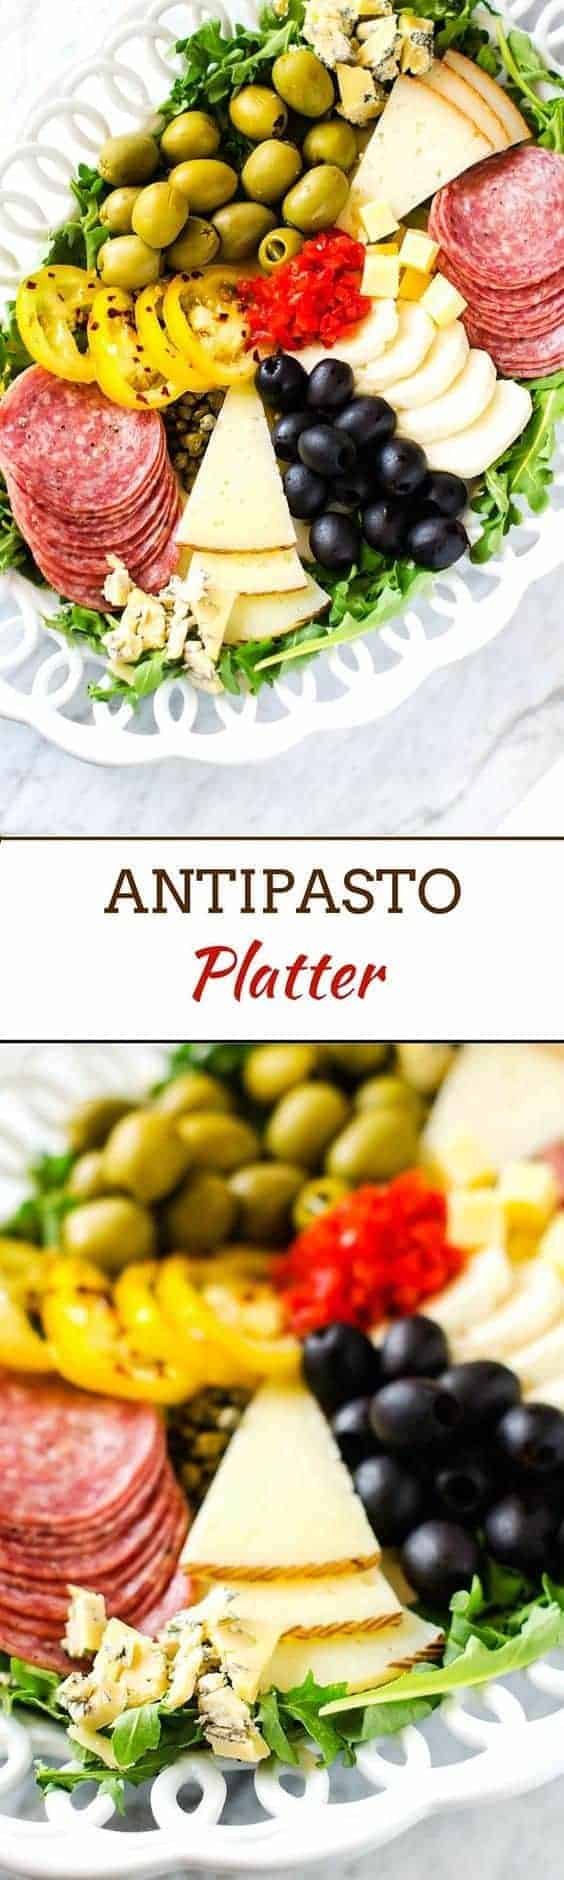 A Pinterest image of an antipasto platter